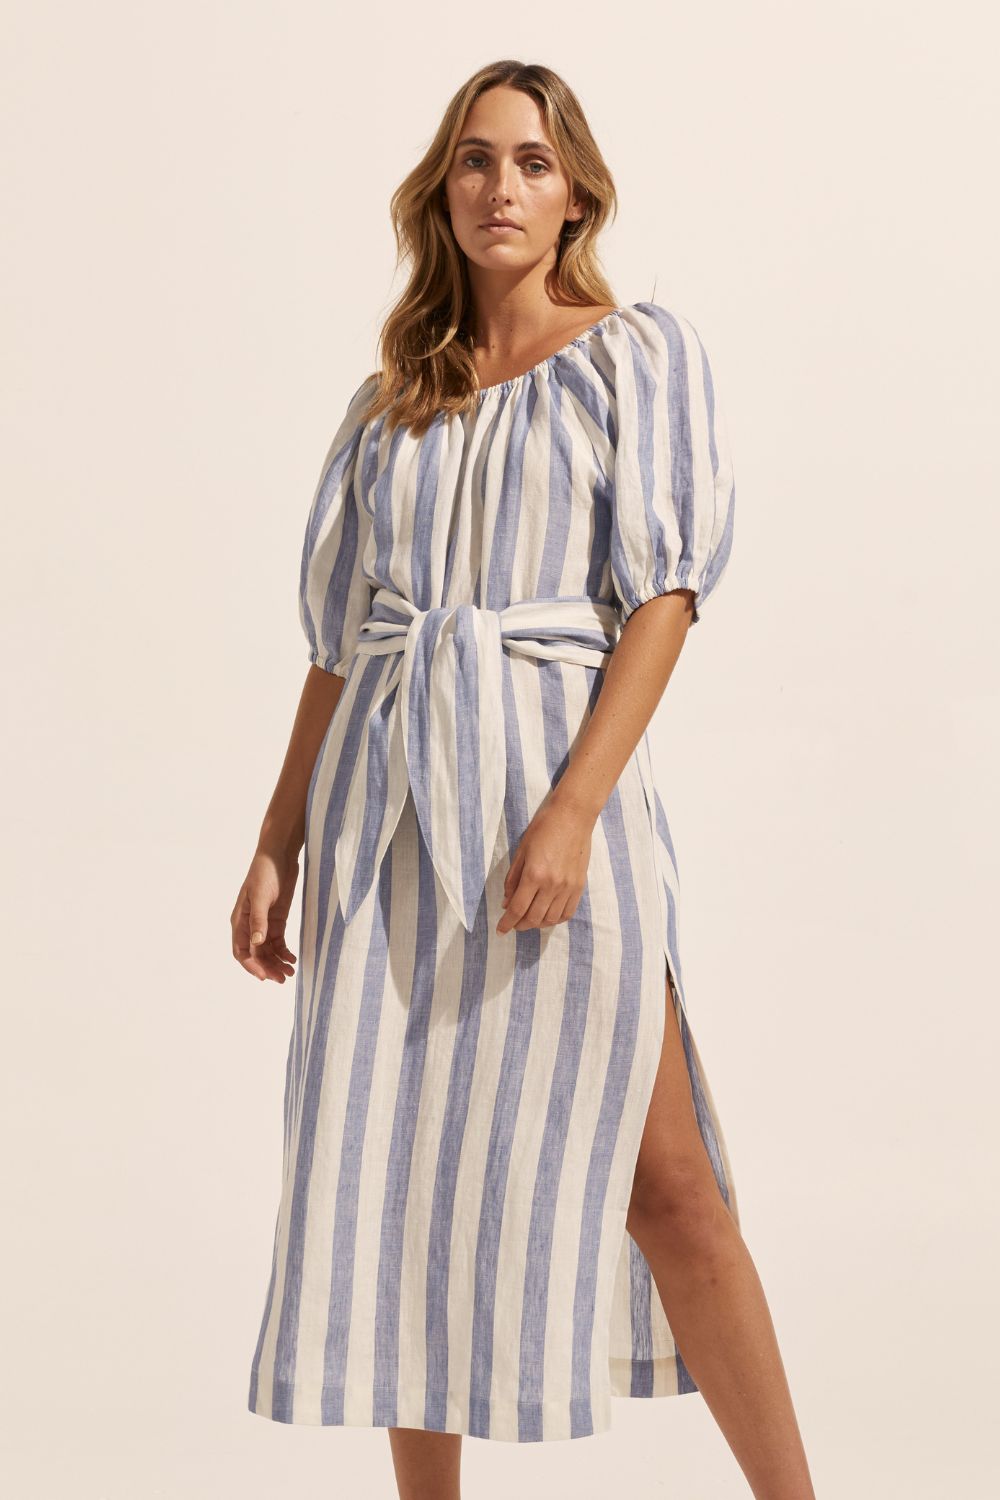 blue and white stripe, midi dress, self tie fabric belt, side splits, front image, elasticated neckline